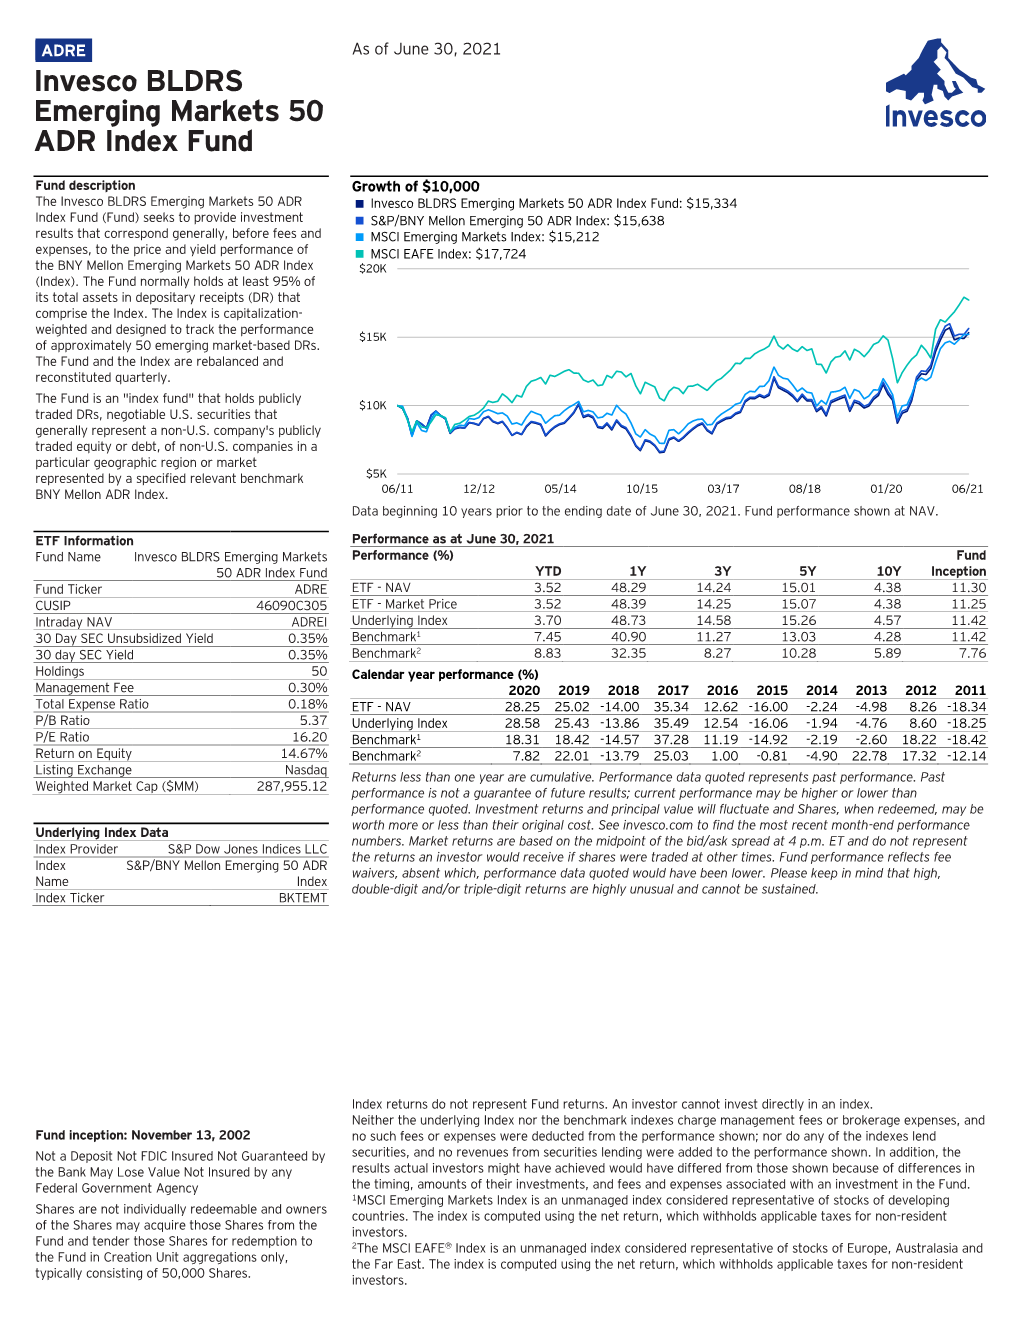 Invesco BLDRS Emerging Markets 50 ADR Index Fund